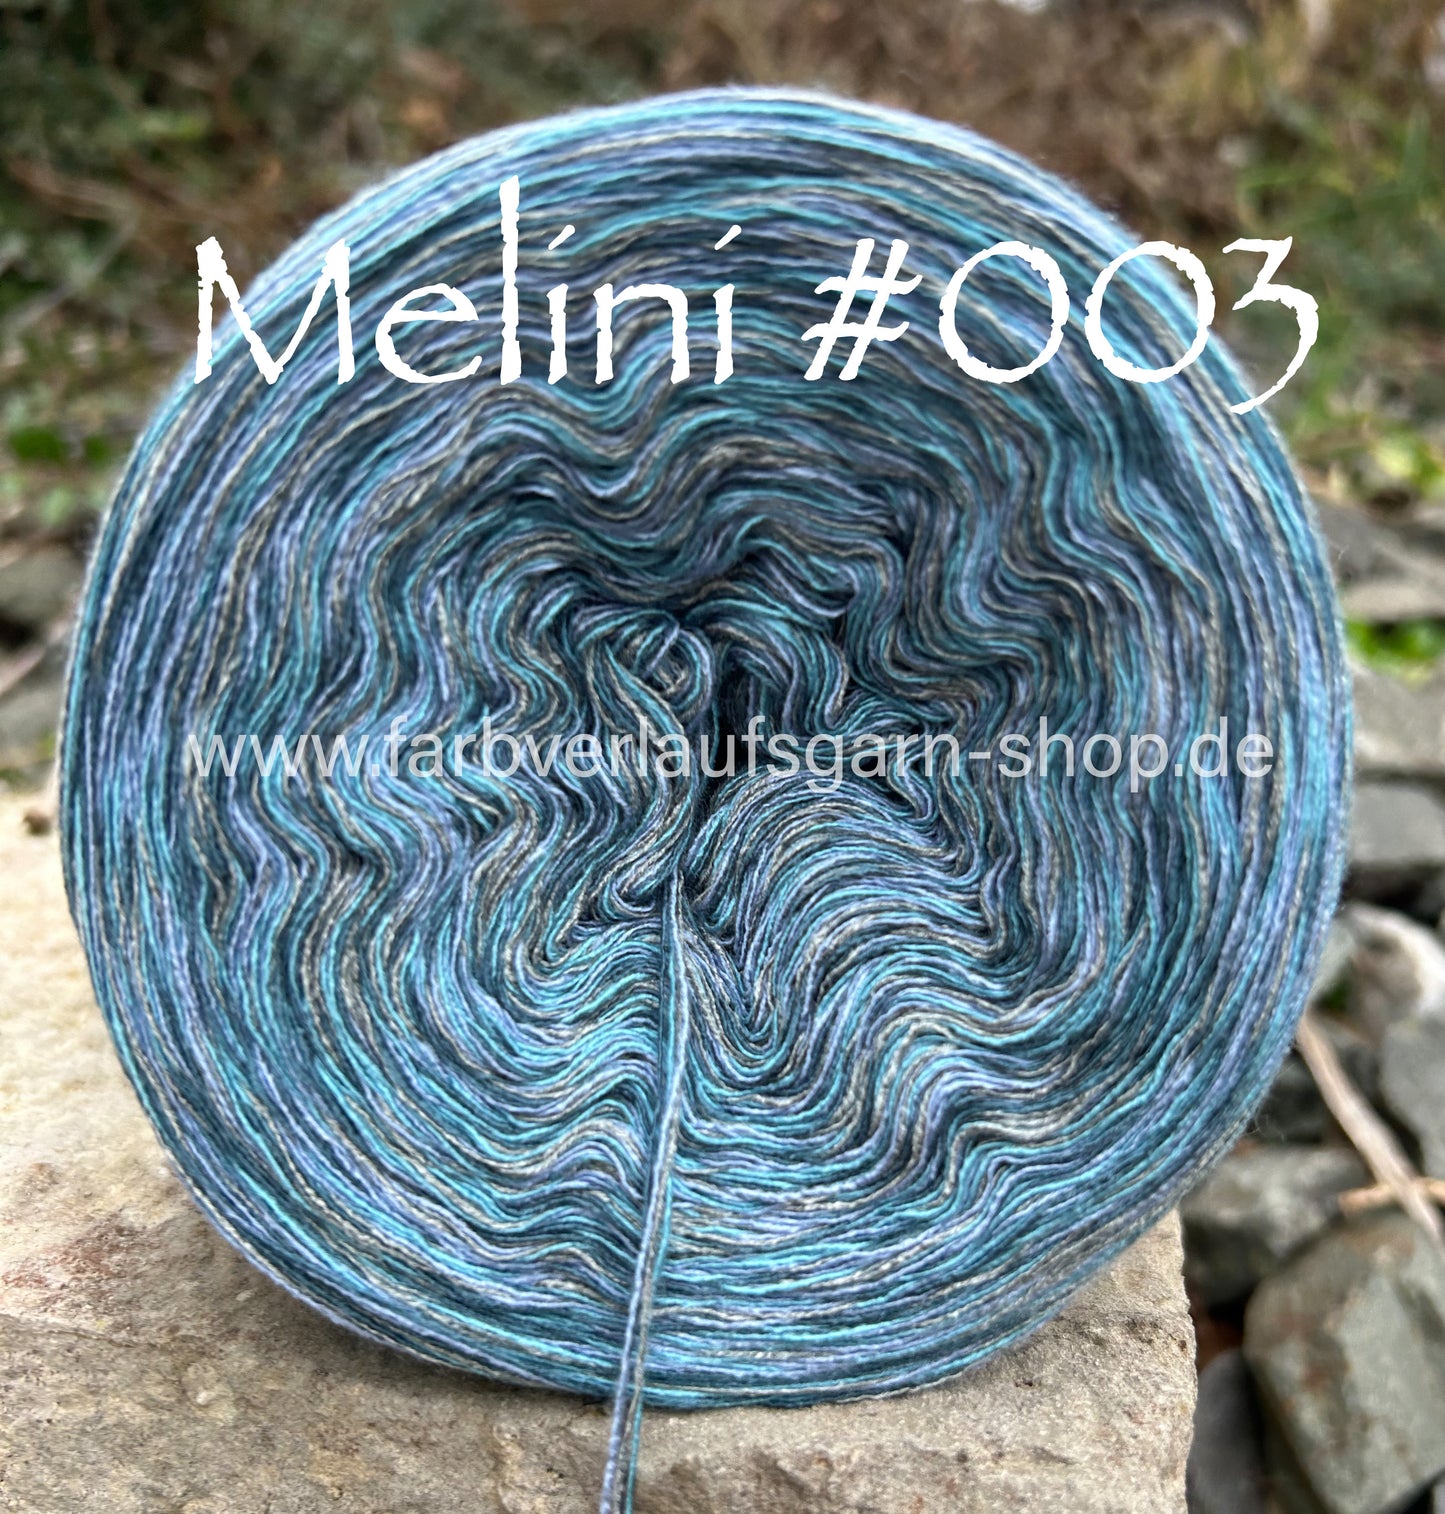 Melini #003